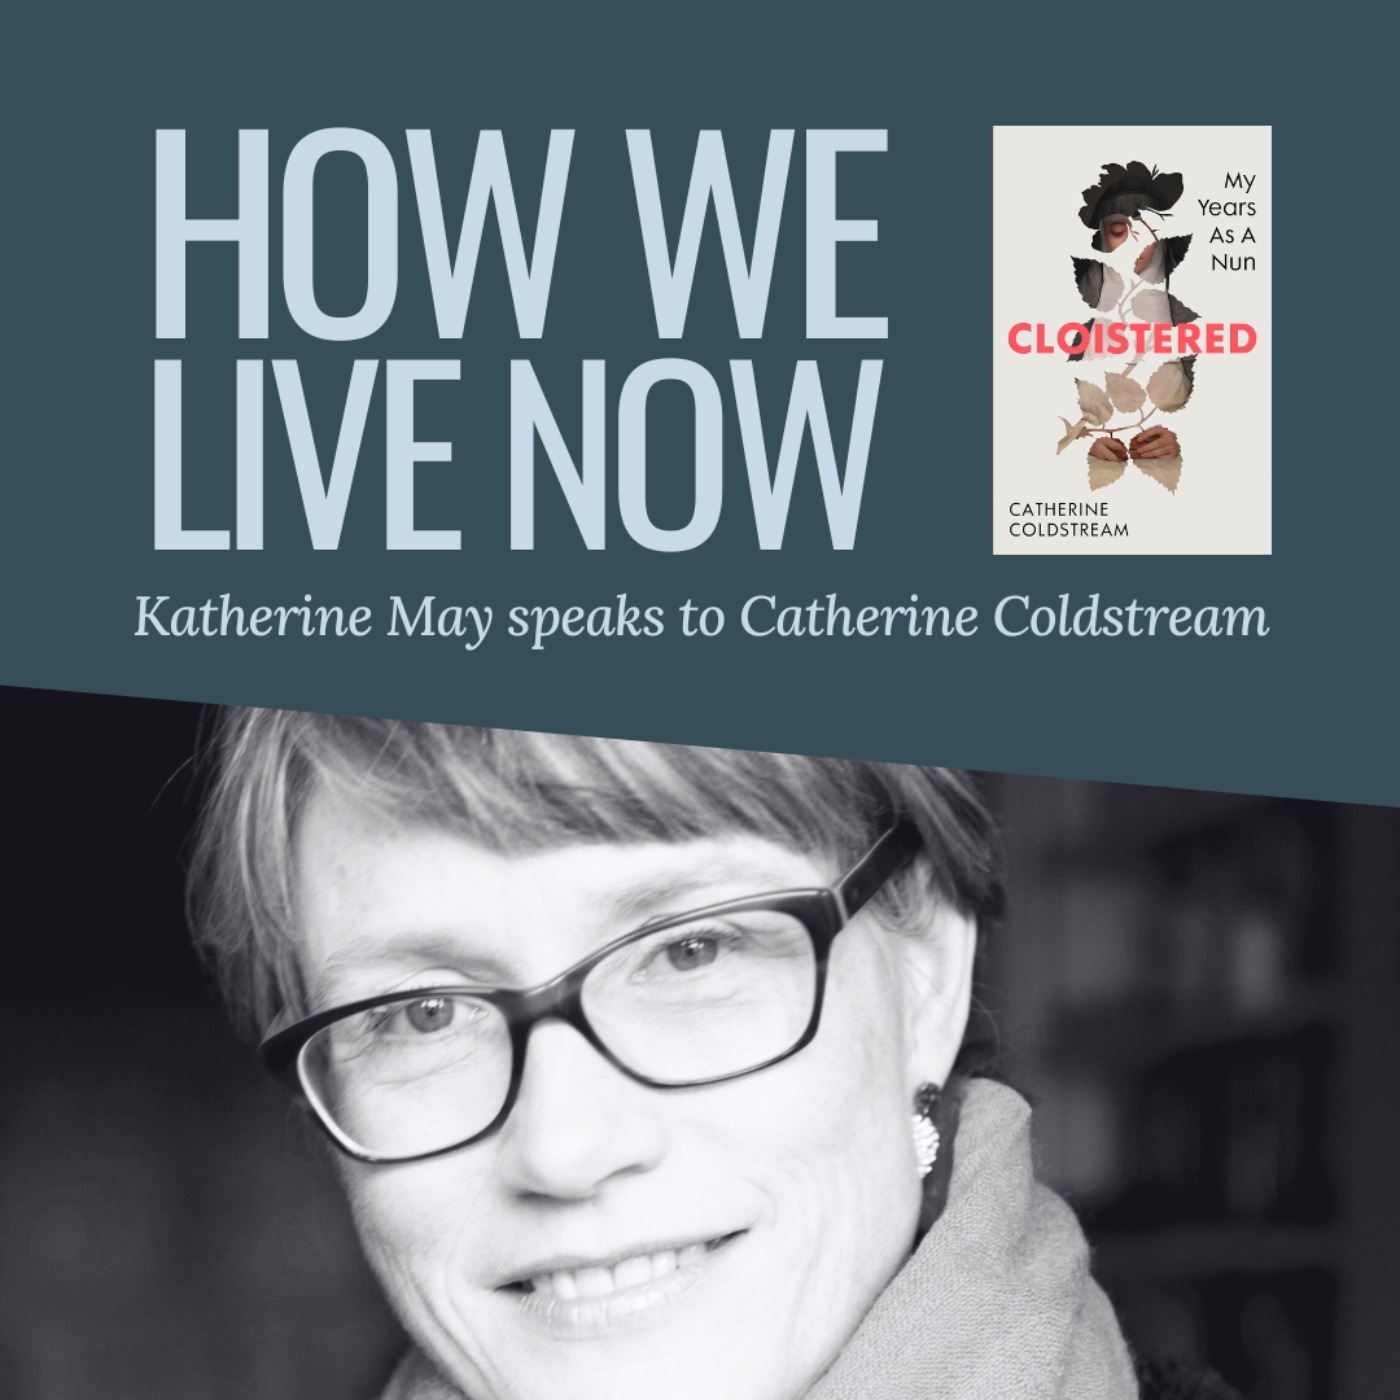 Catherine Coldstream on life as a nun